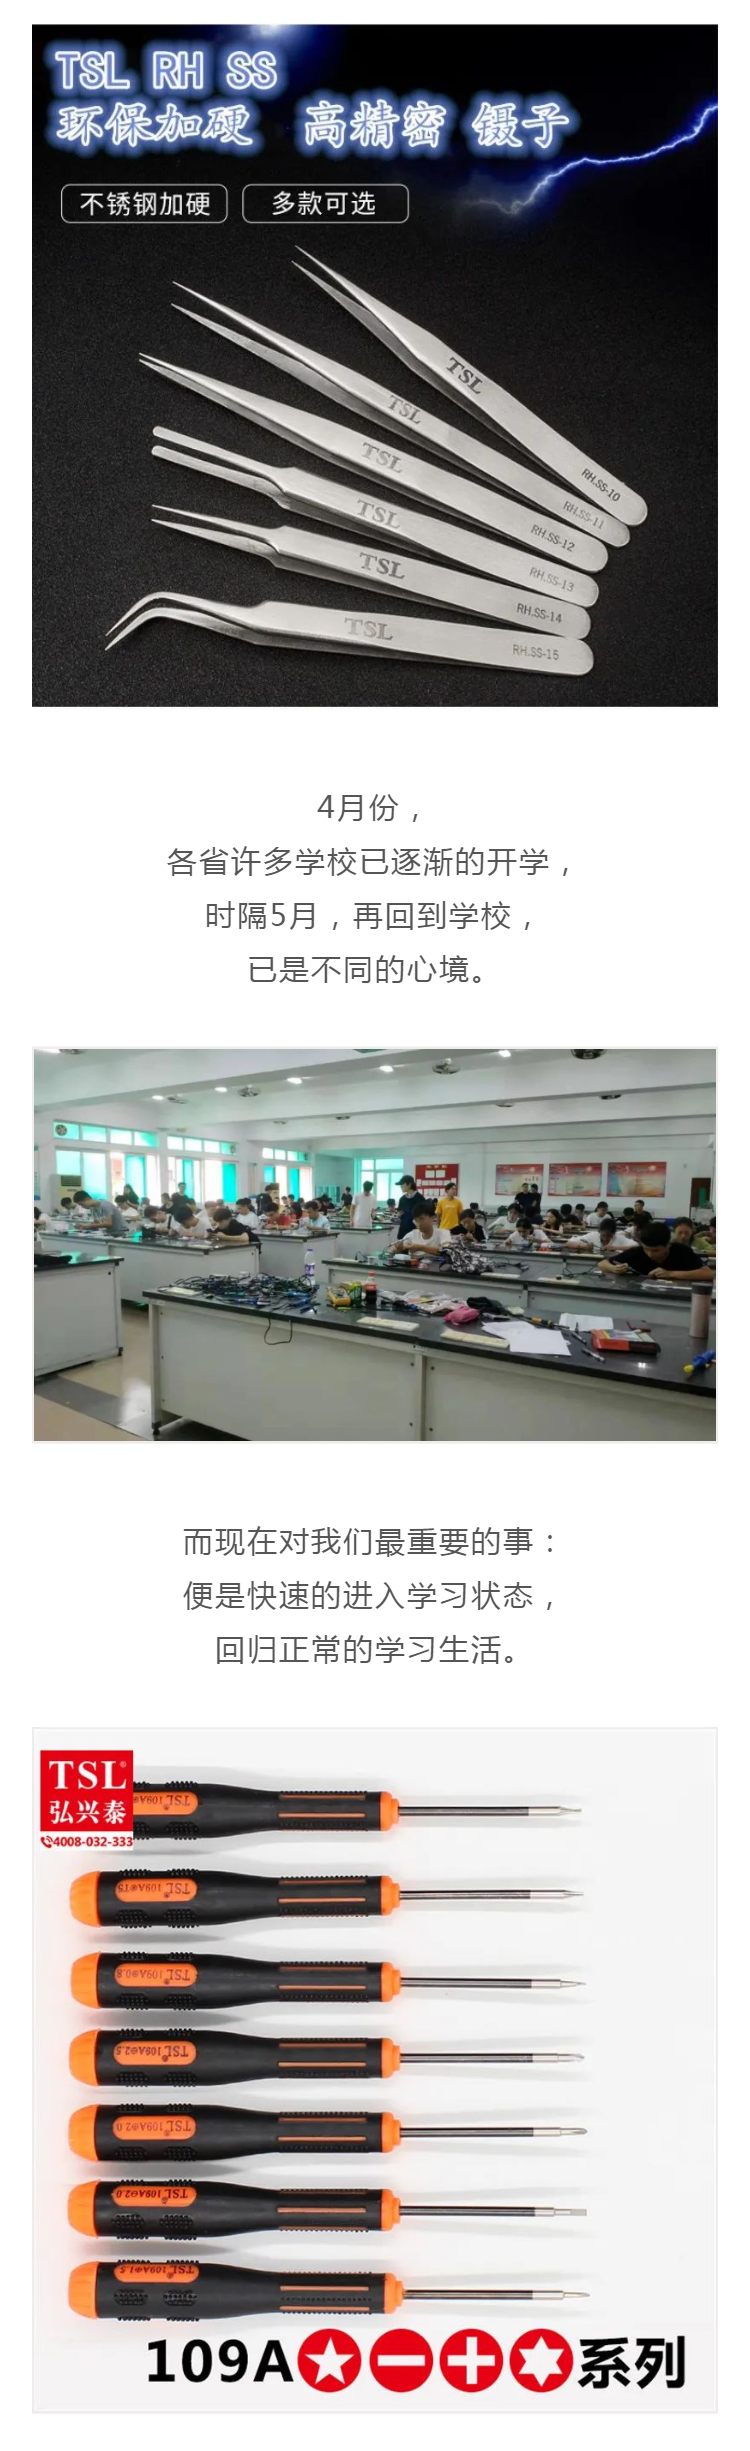 20200415_1408_yiban_screenshot (2).png